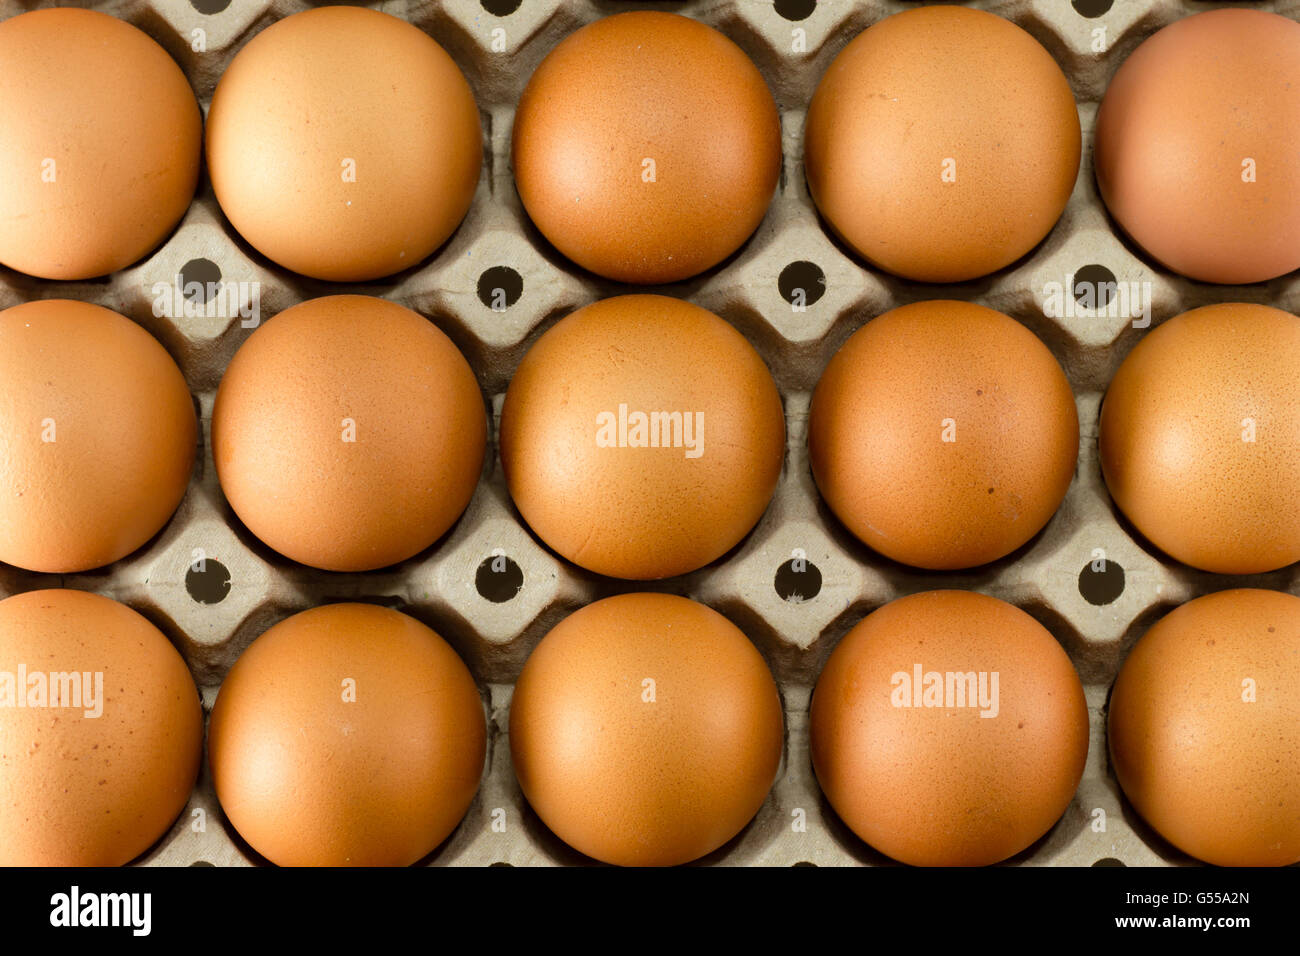 Closeup of many fresh brown eggs in carton tray Stock Photo